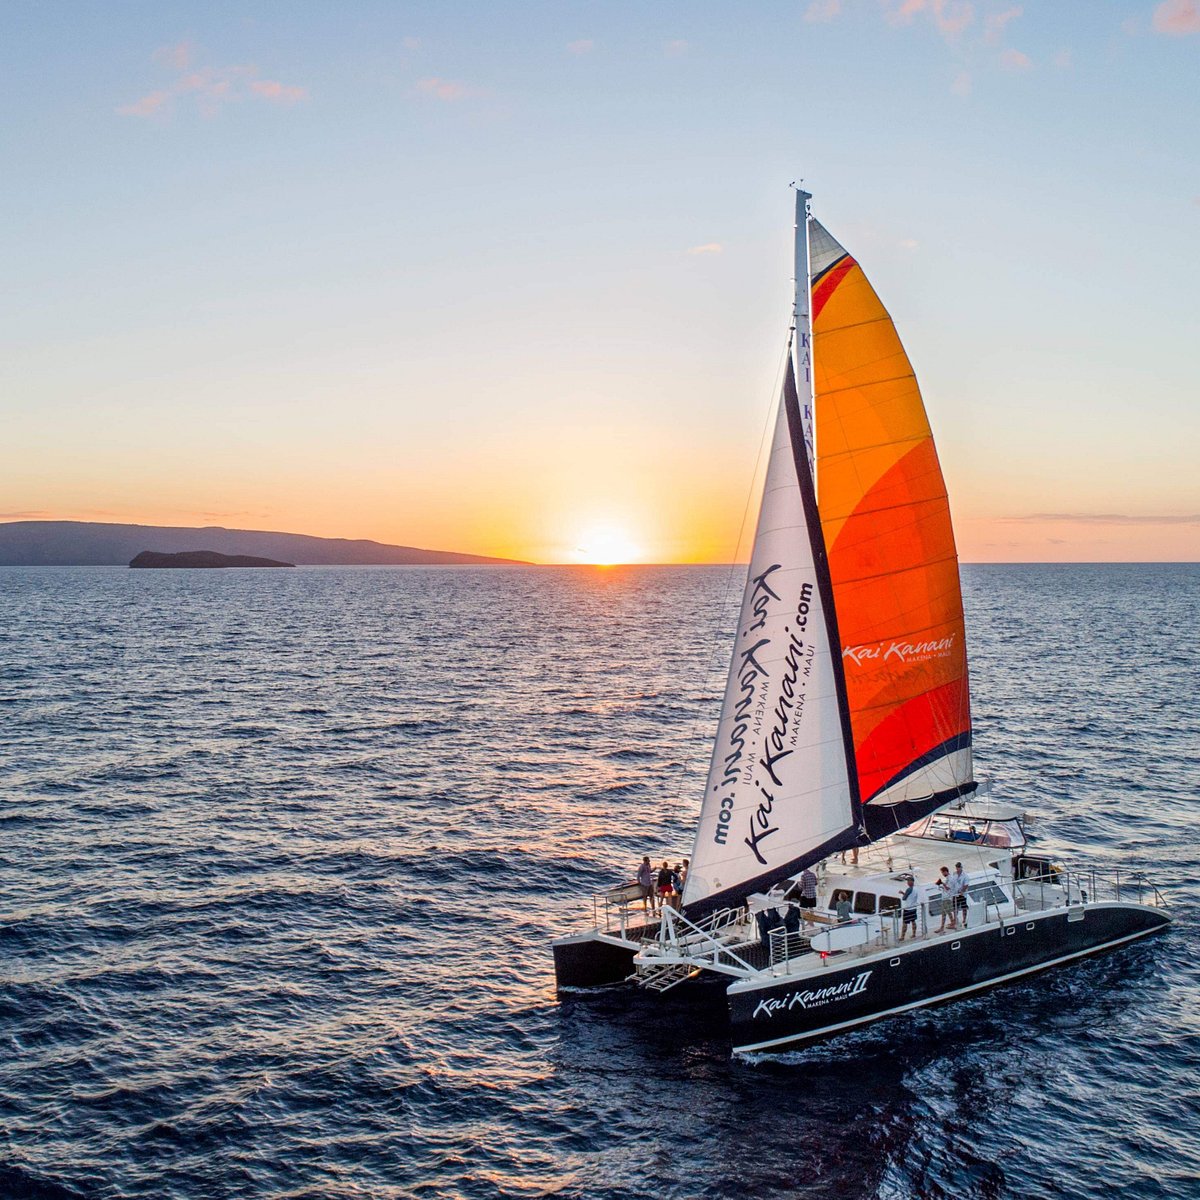 Product Sunset Dinner Sail Adventure